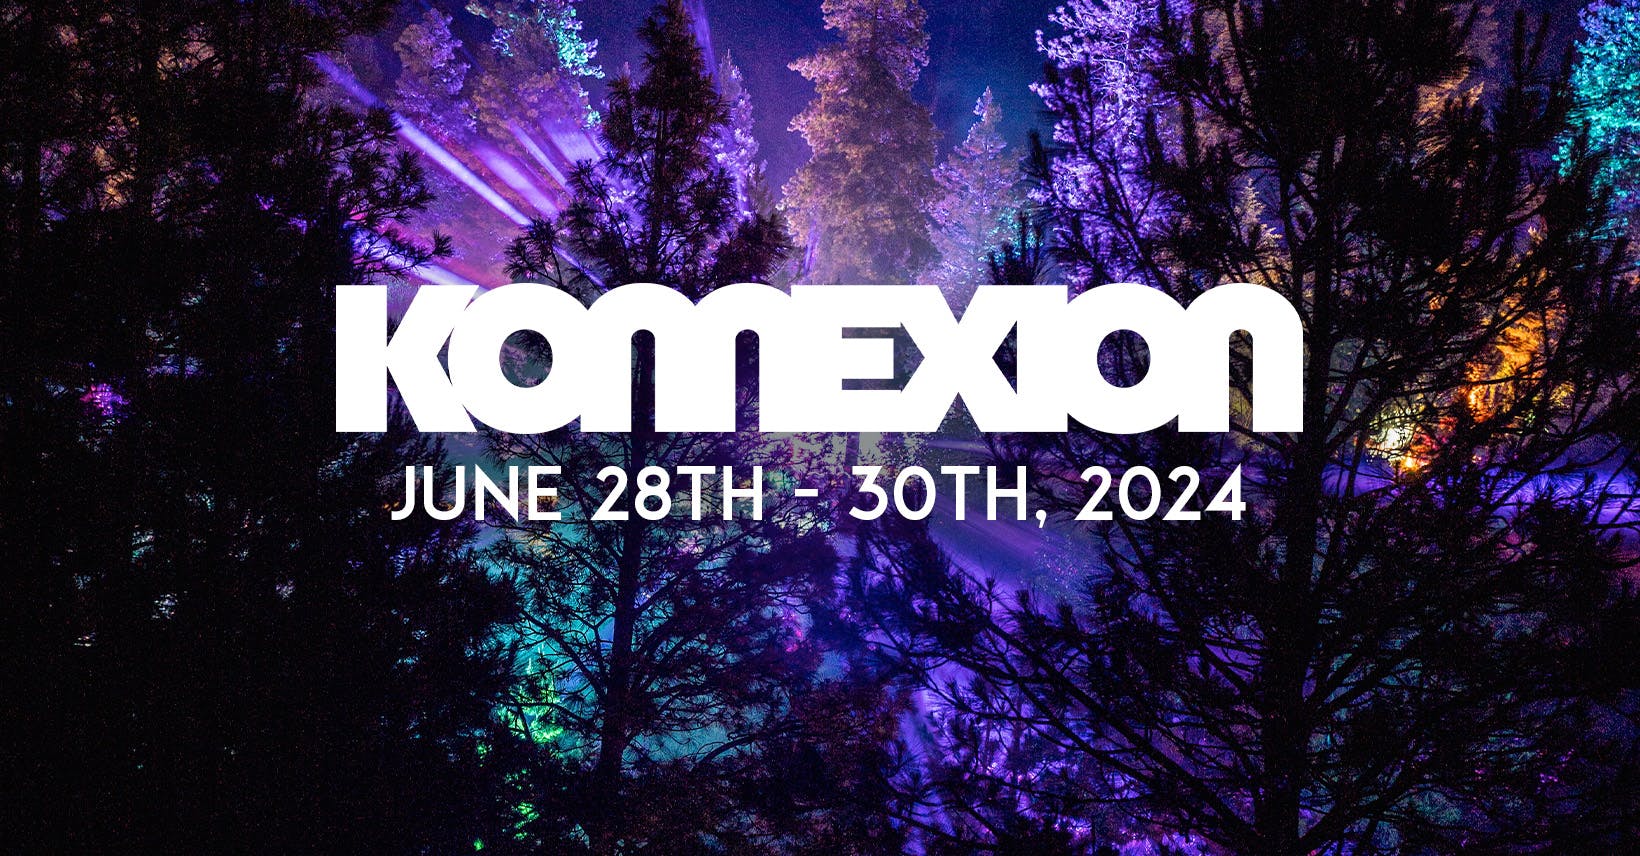 Konnexion 2023 Dates